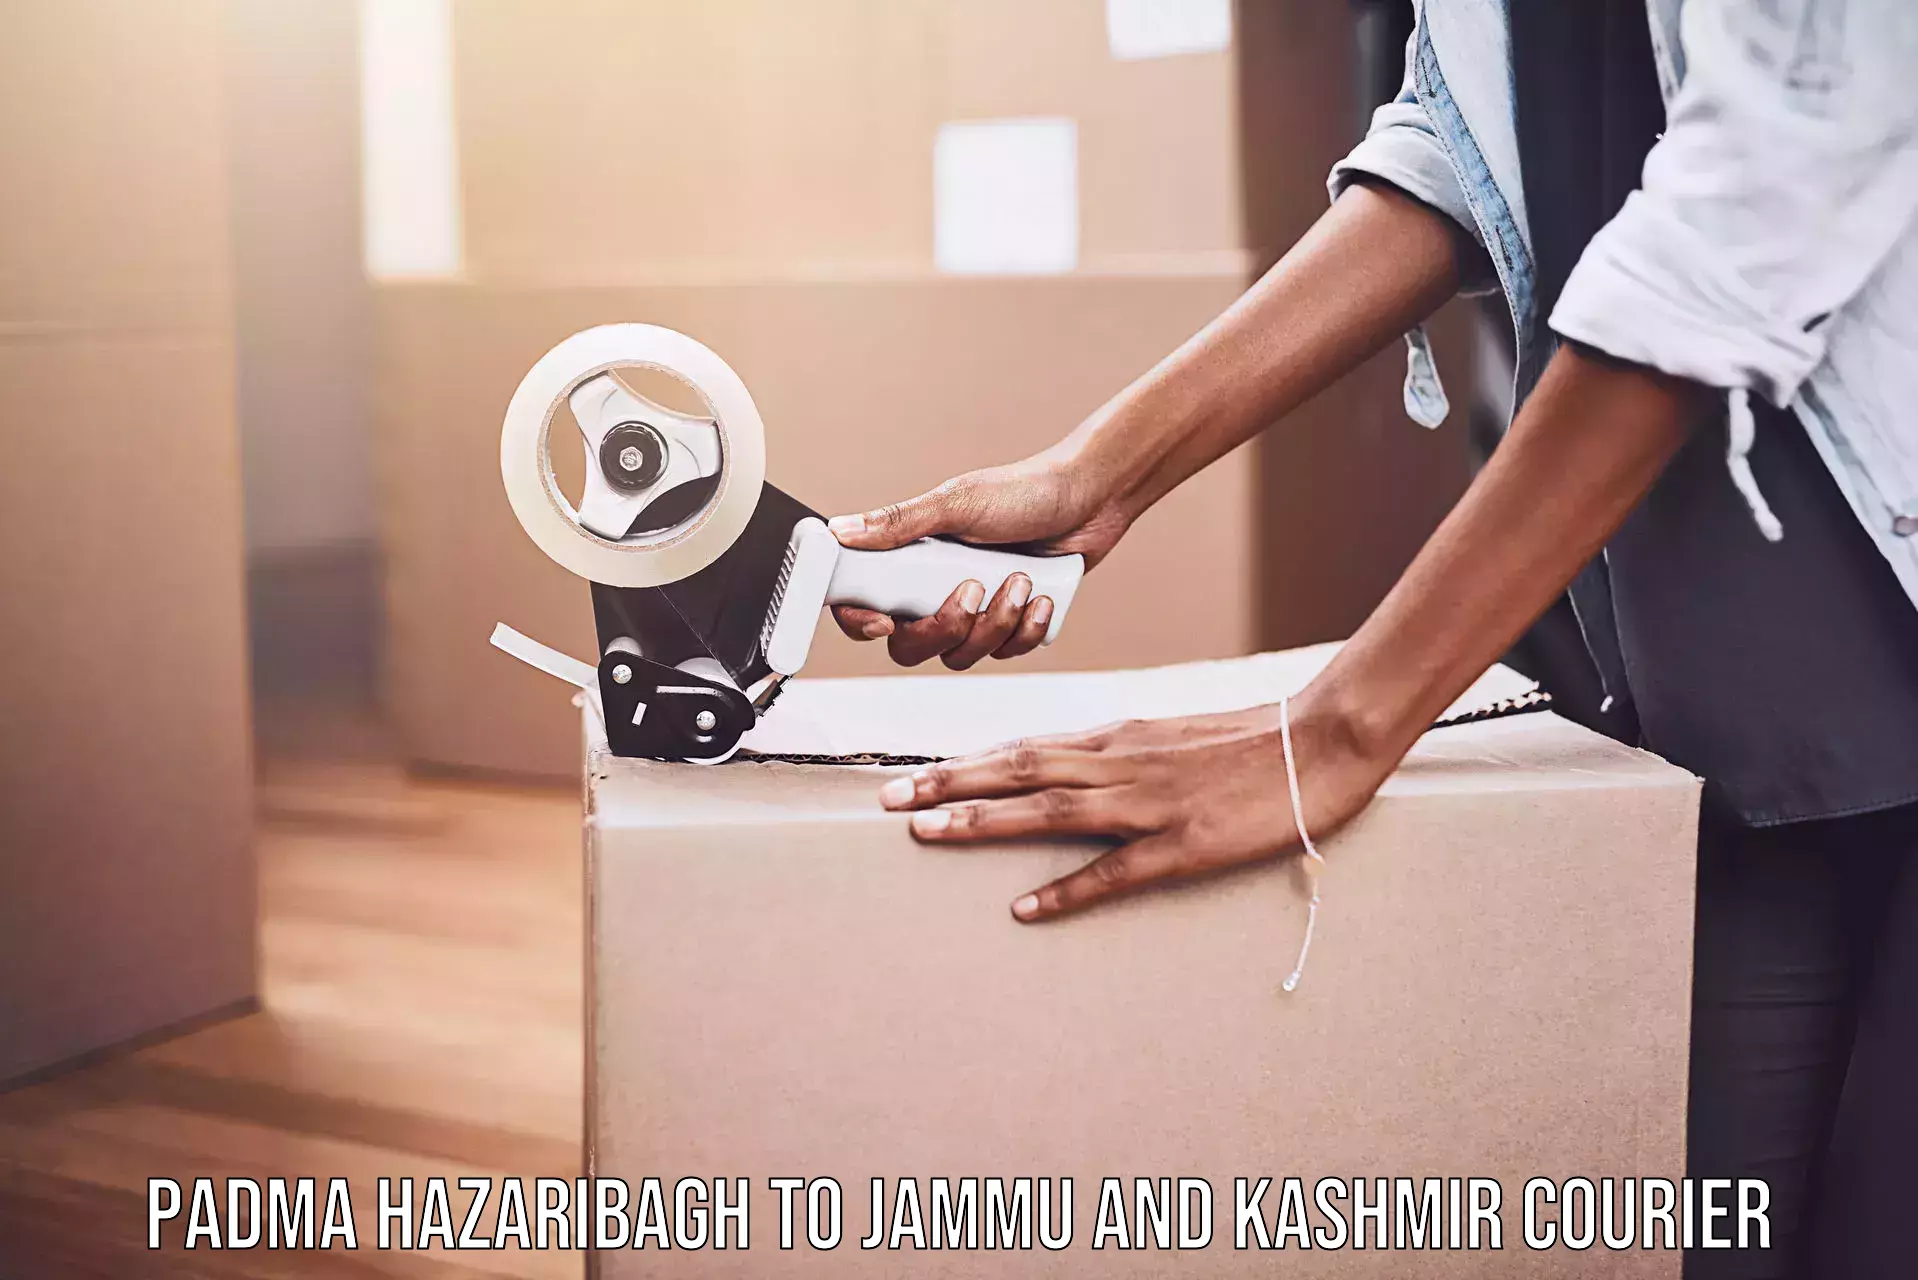 24-hour courier service Padma Hazaribagh to Srinagar Kashmir